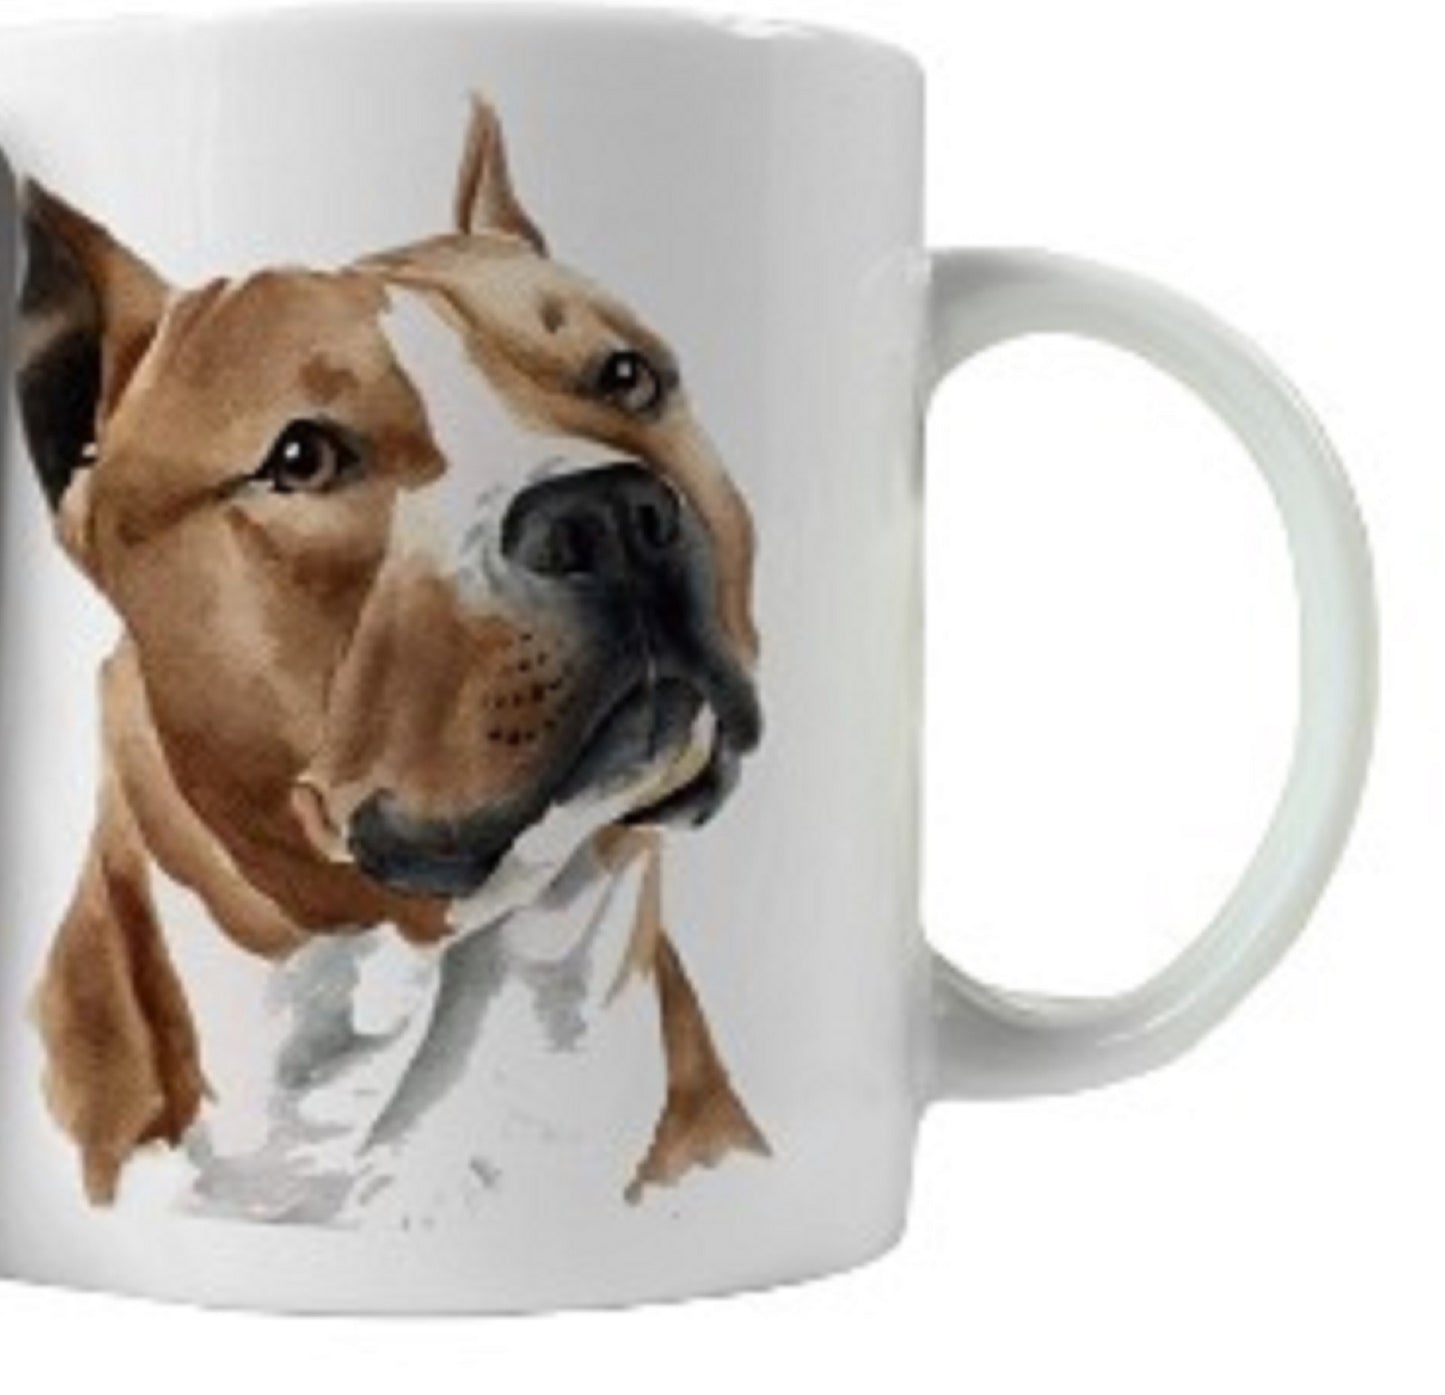  Staffy Dog Head Mug and Coaster by Free Spirit Accessories sold by Free Spirit Accessories